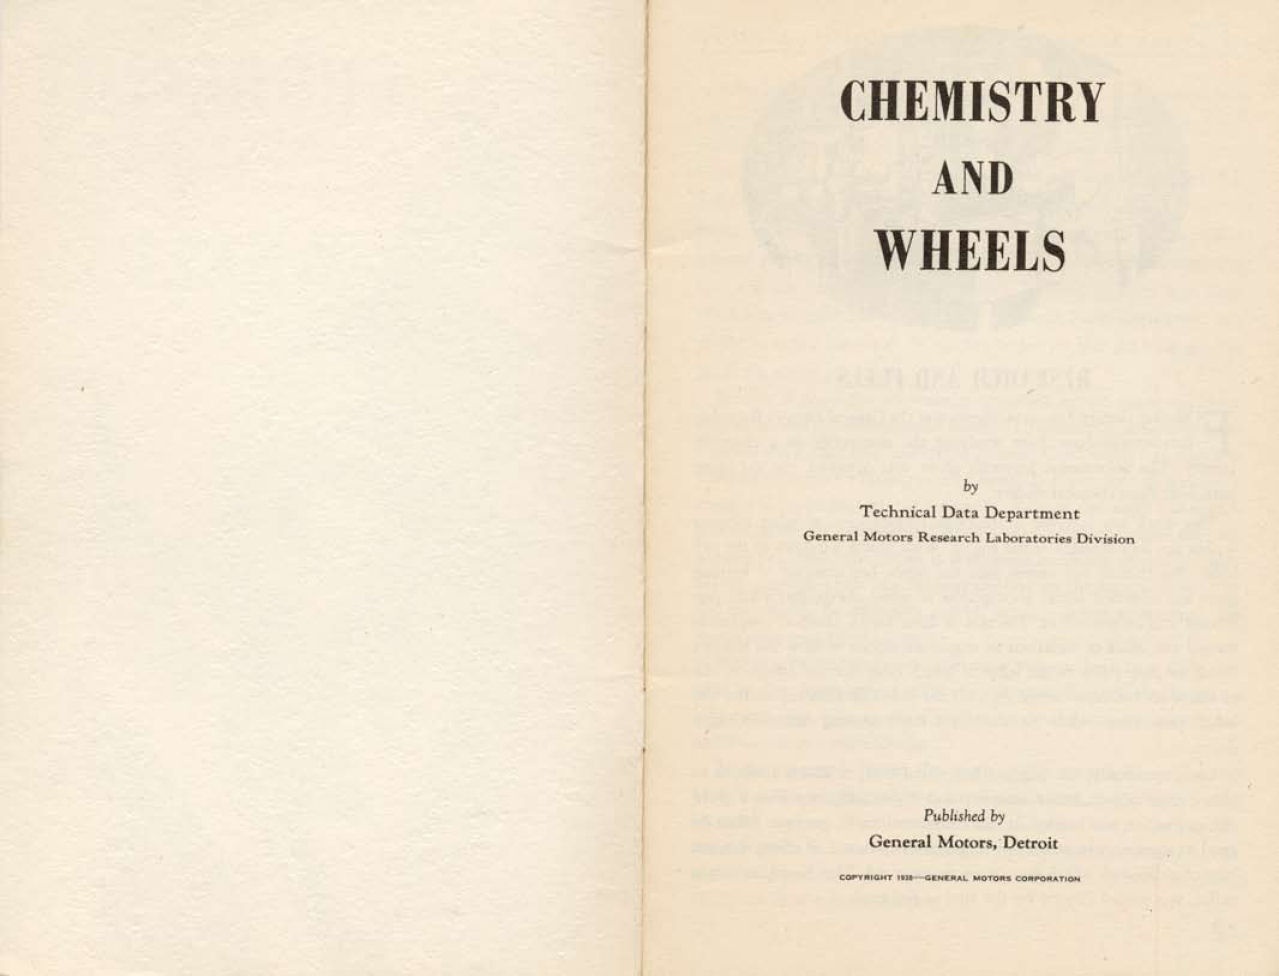 n_1938-Chemistry and Wheels-00a-01.jpg